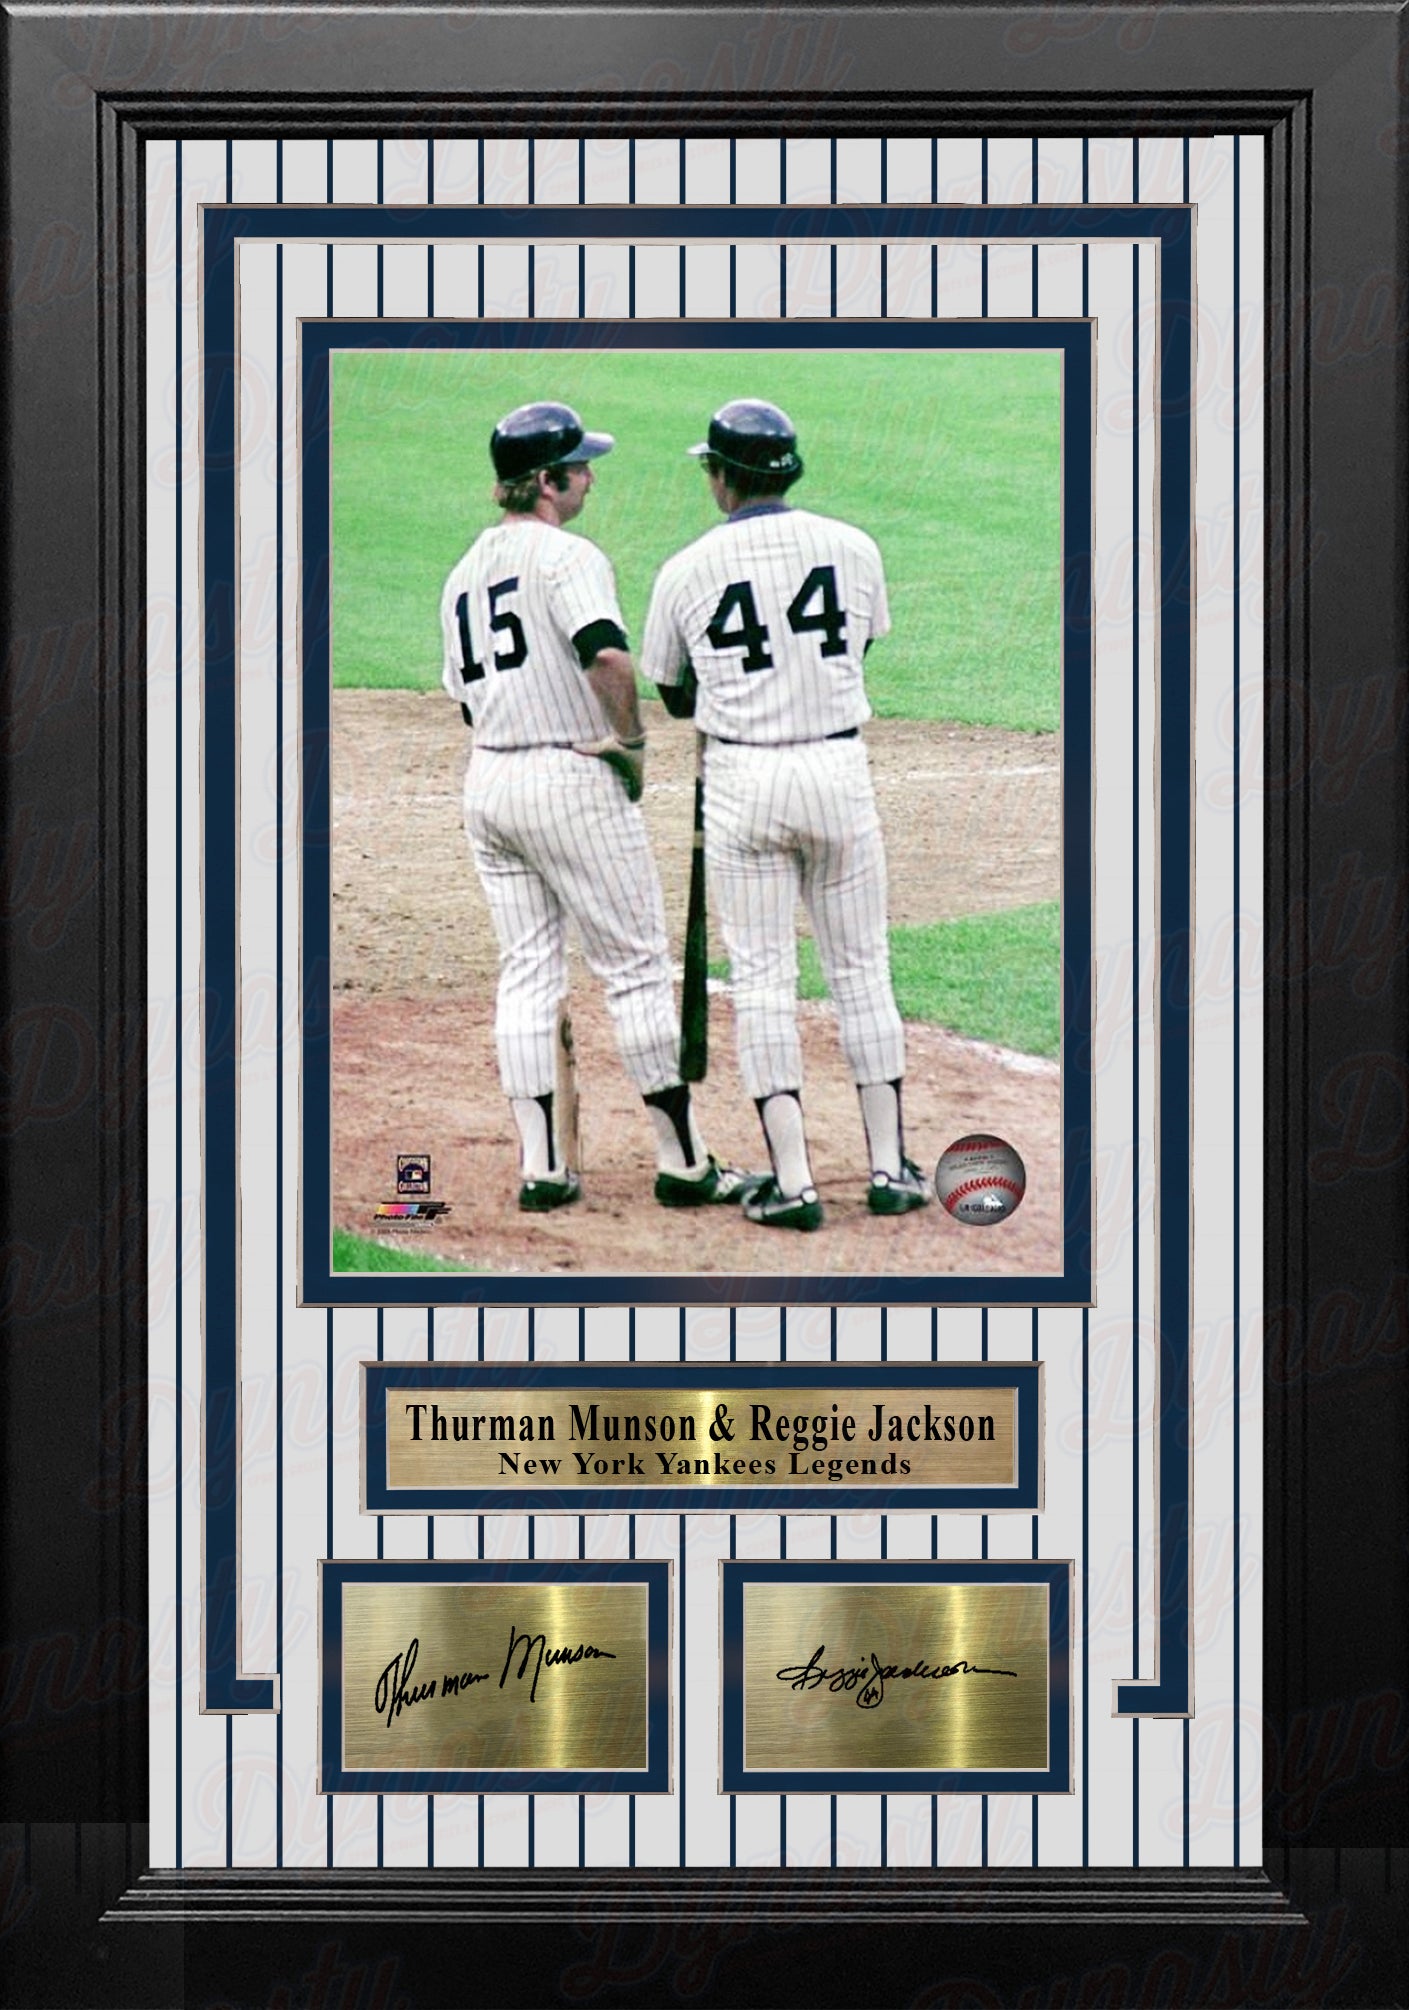 Thurman Munson & Reggie Jackson New York Yankees 8x10 Framed Baseball Photo with Engraved Autographs - Dynasty Sports & Framing 